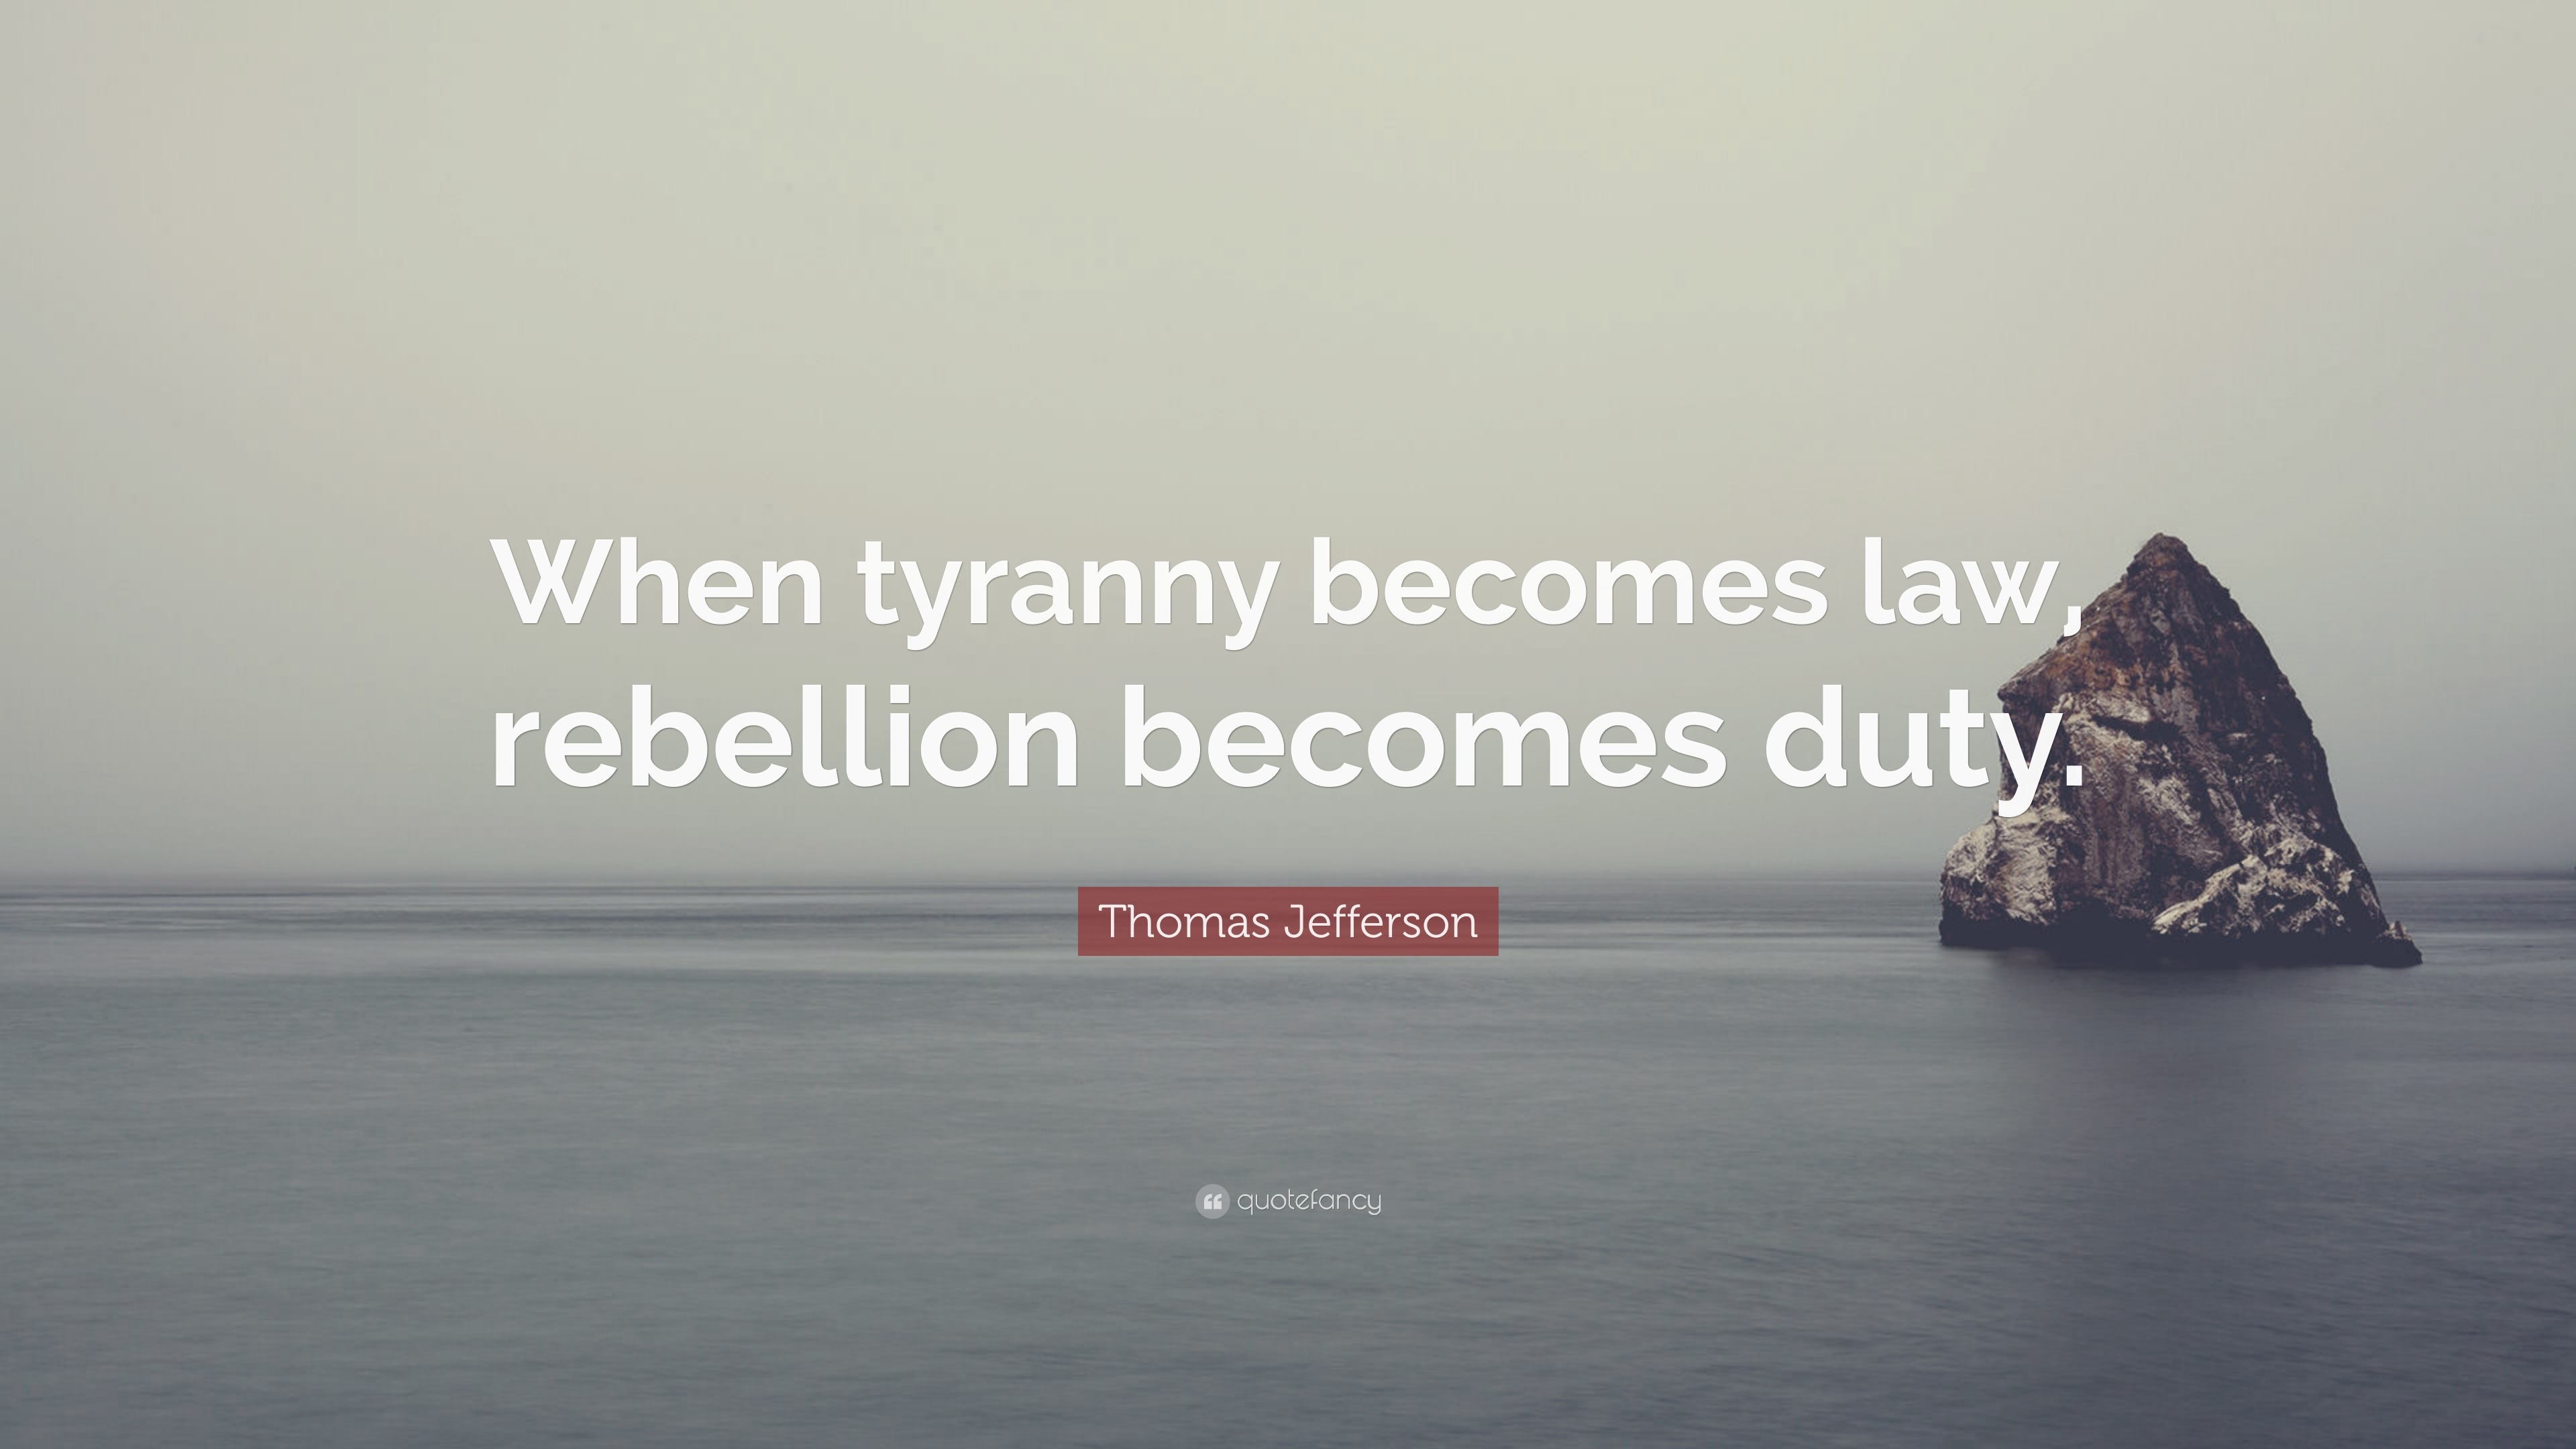 thomas jefferson tyranny quote